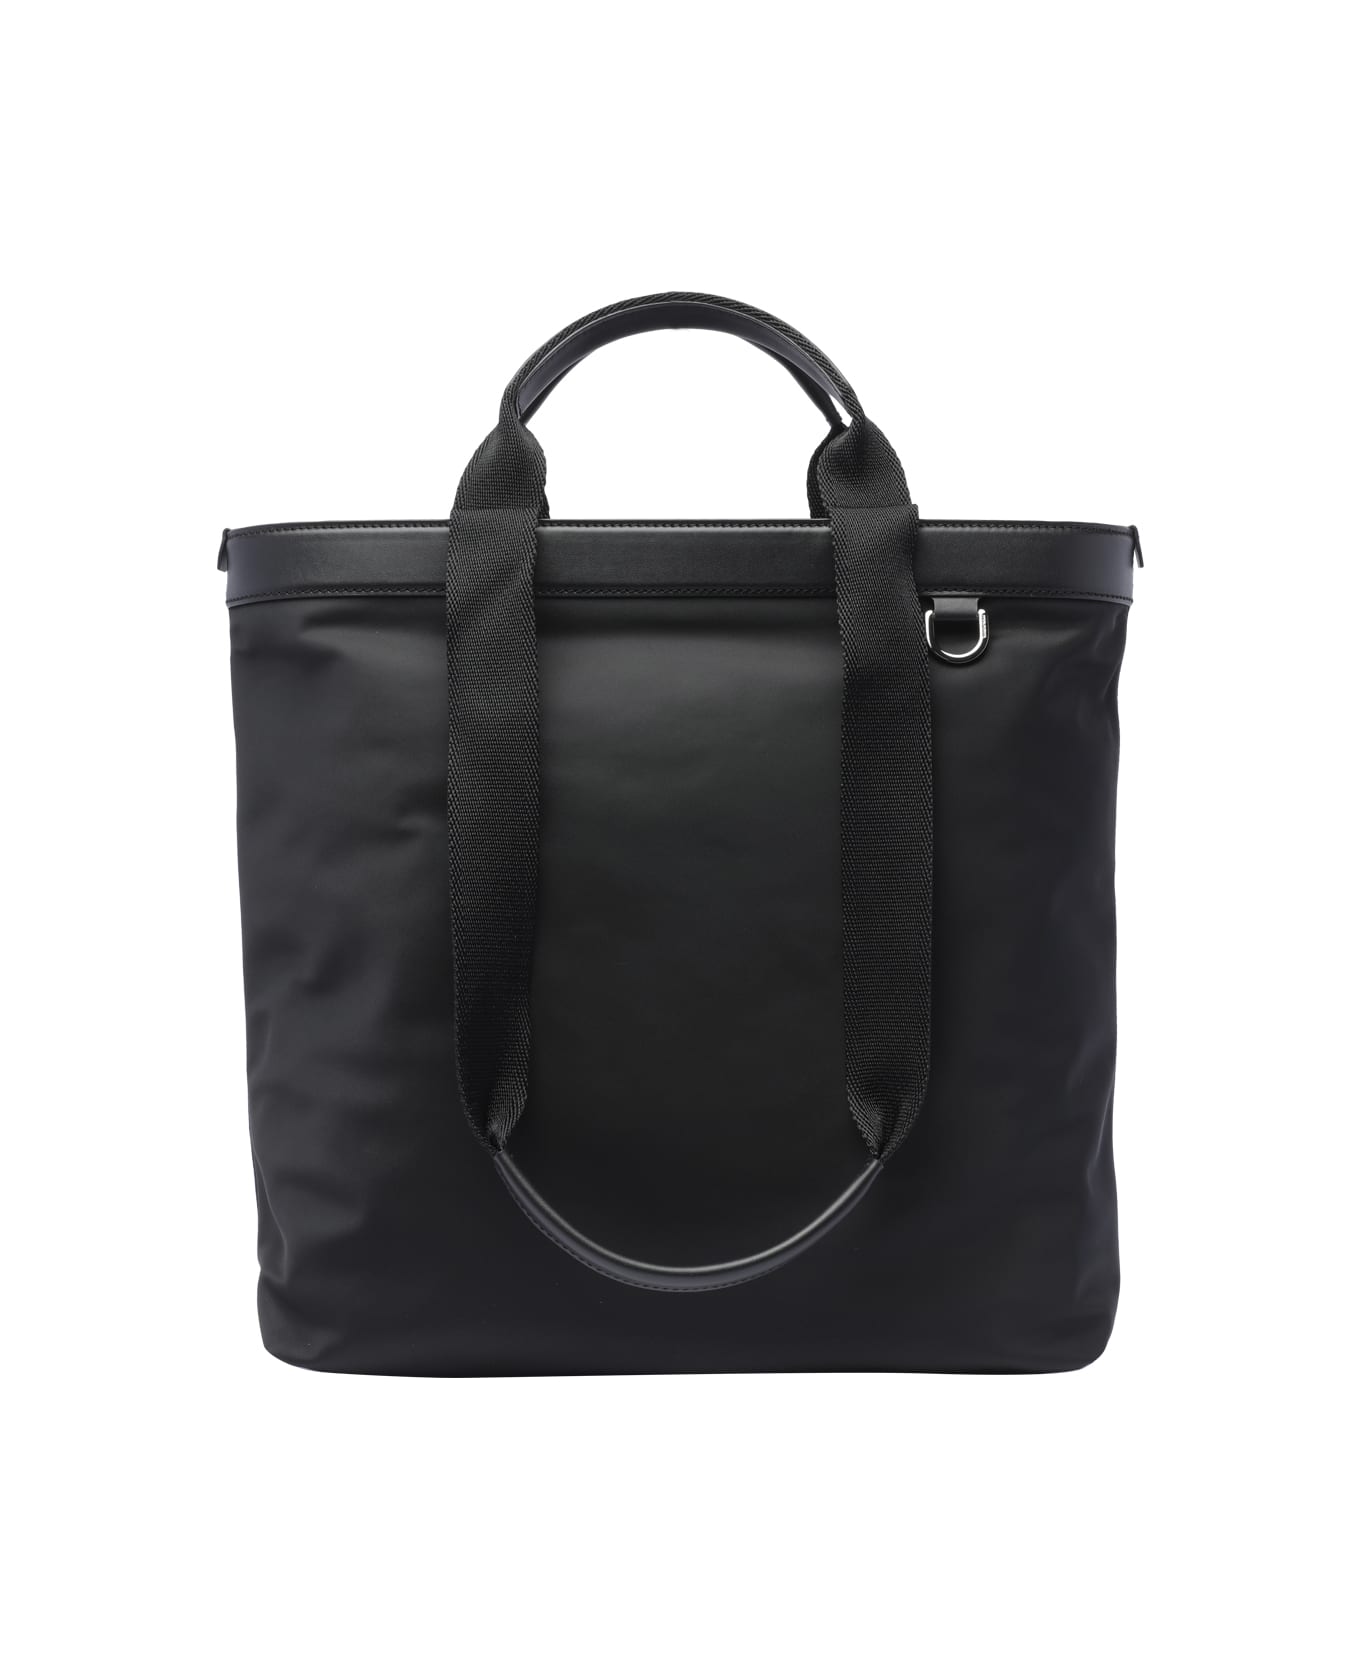 Dolce & Gabbana Logo Shopping Bag - Black